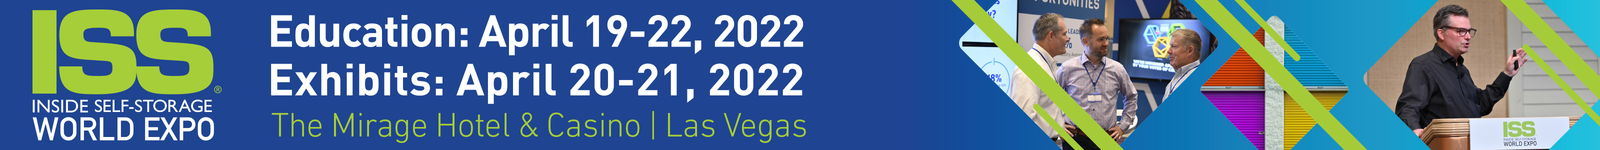 Inside Self-Storage World Expo 2022 logo